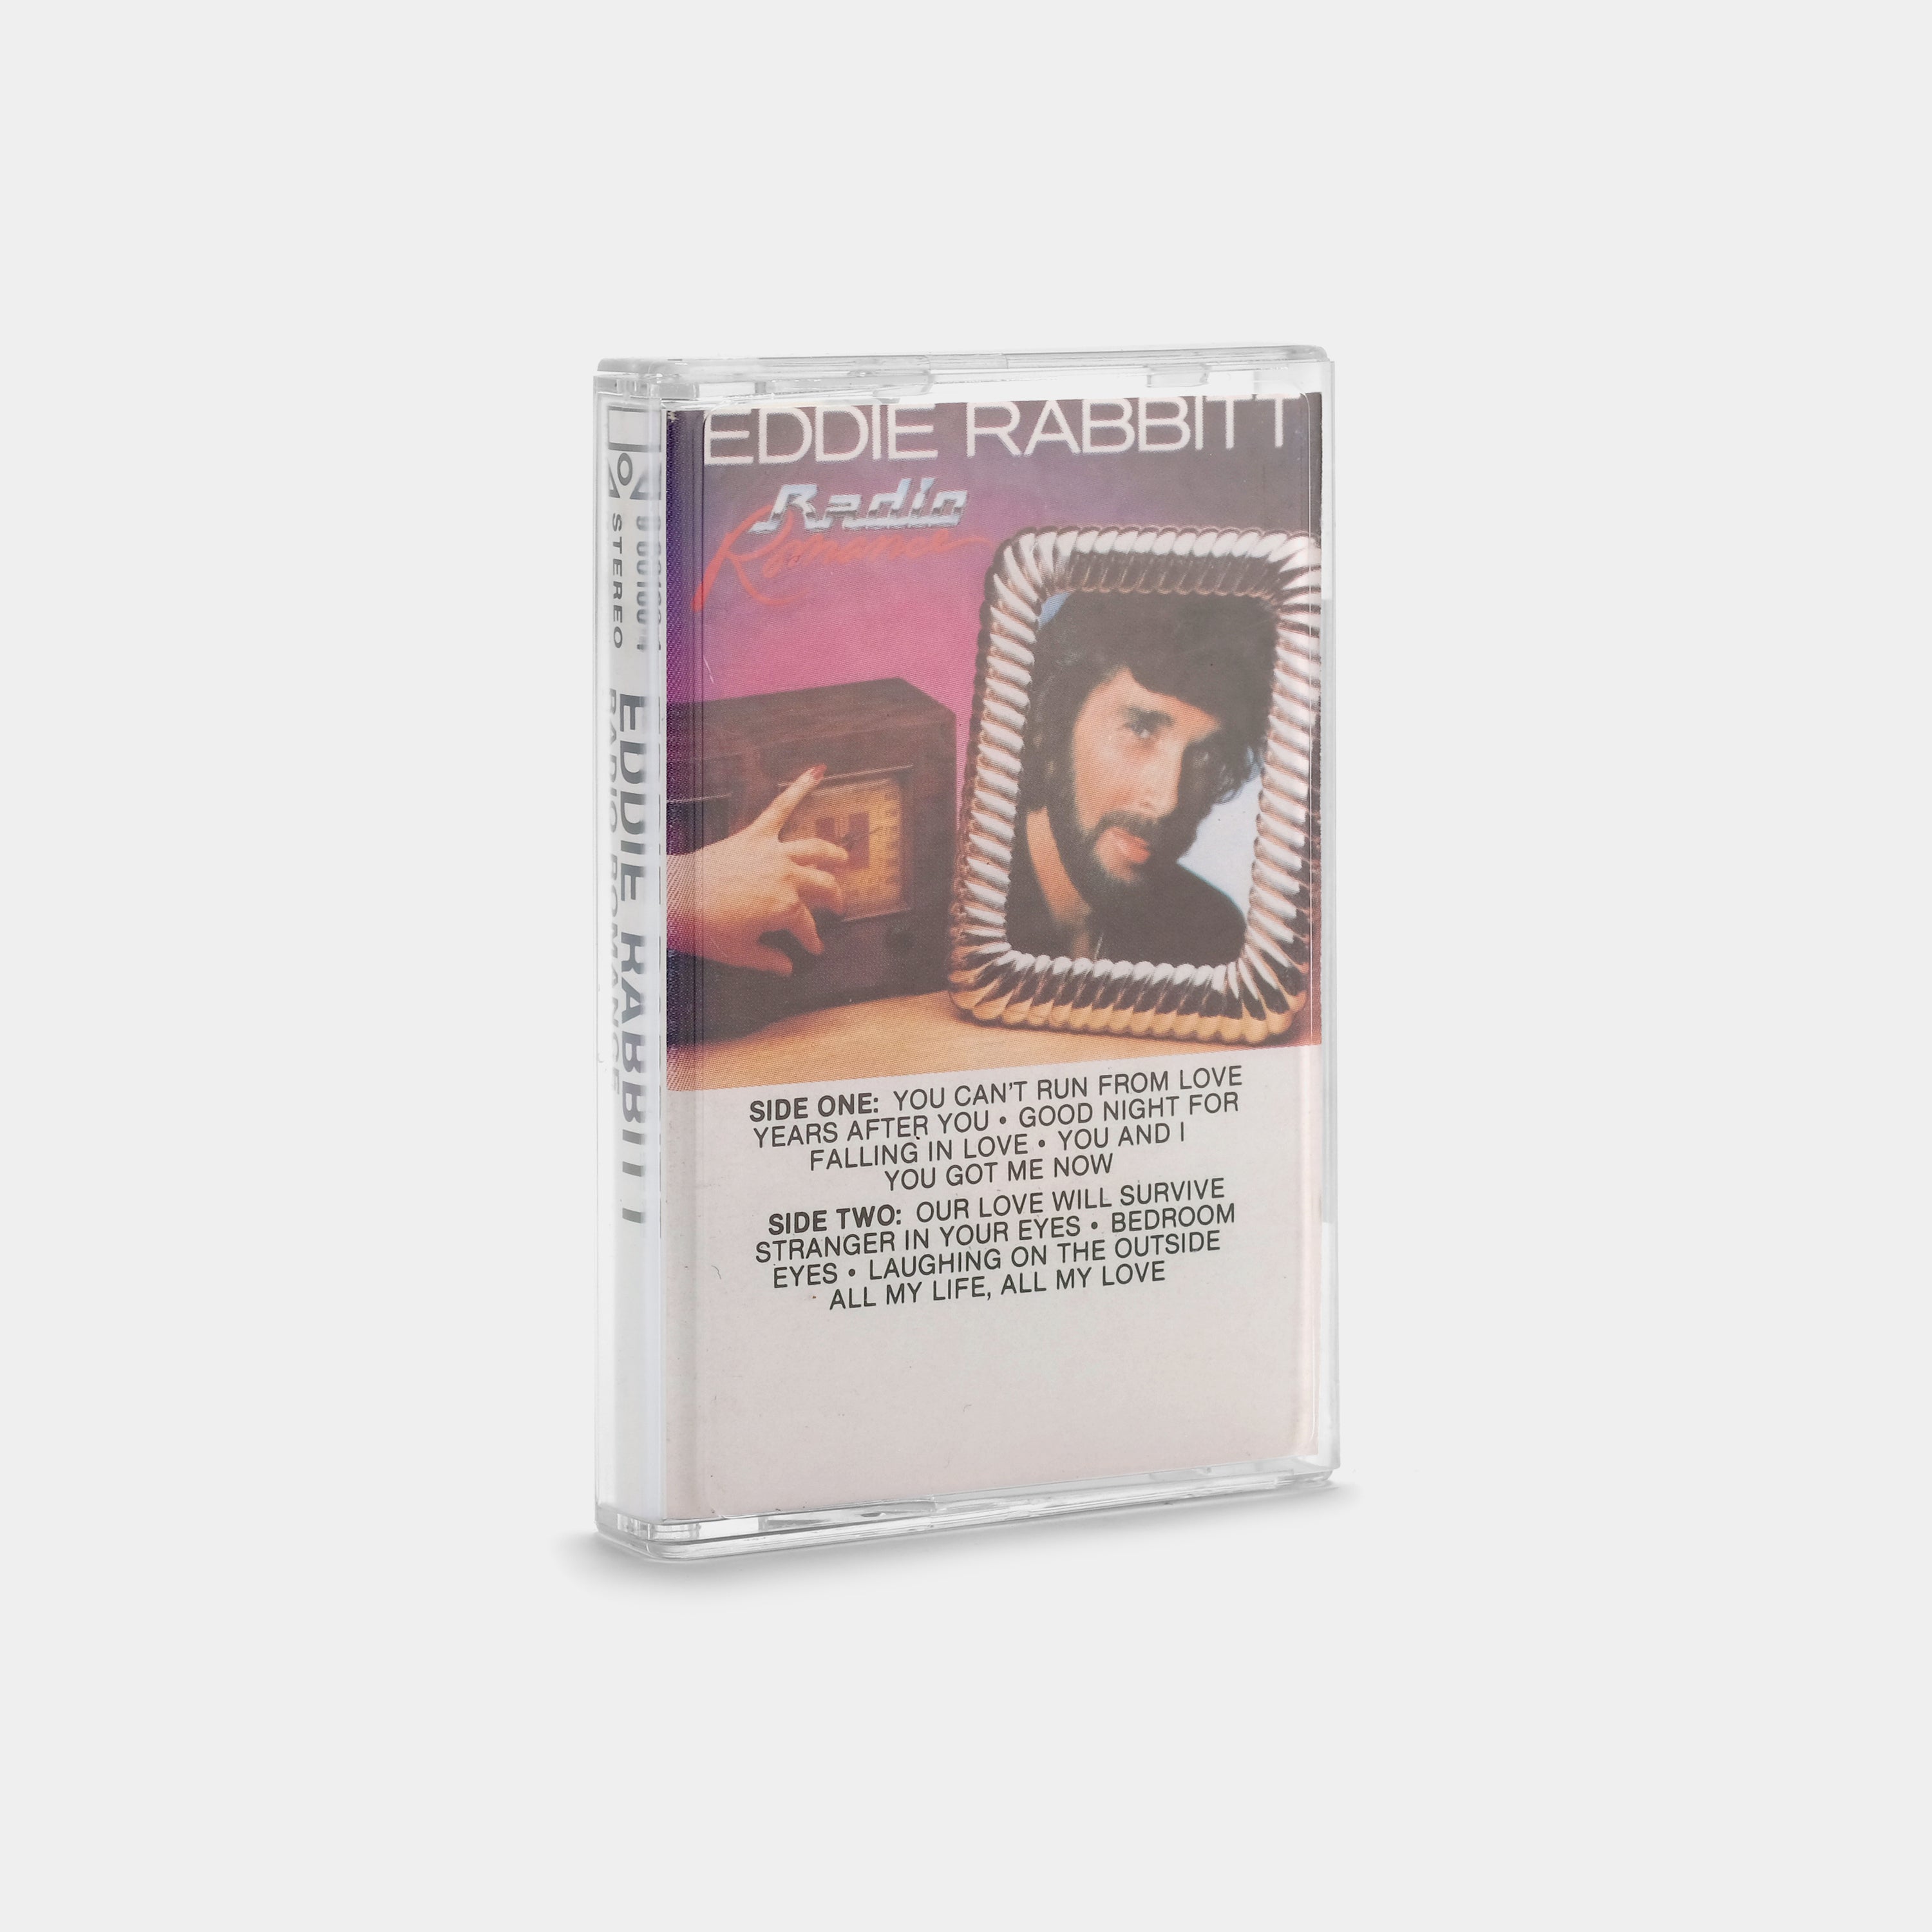 Eddie Rabbitt - Radio Romance Cassette Tape